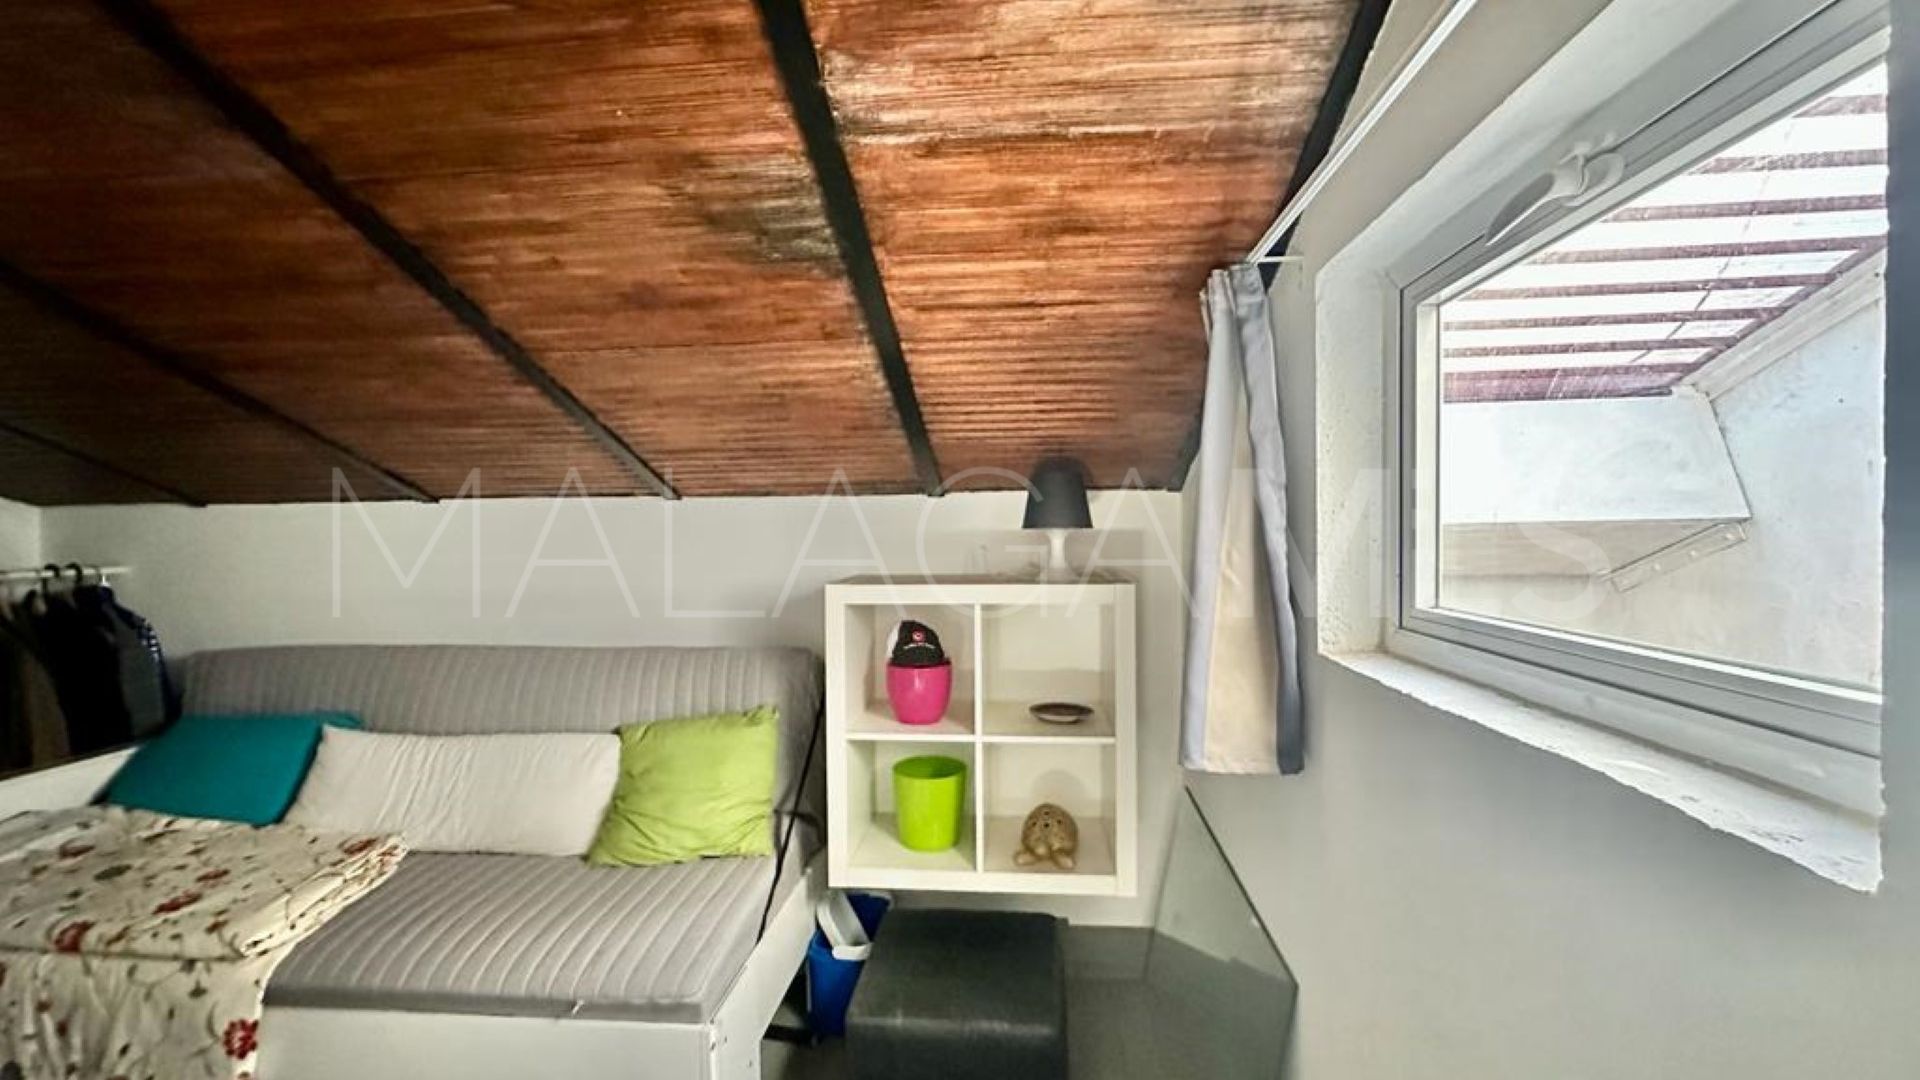 Marbella - Puerto Banus 1 bedroom duplex penthouse for sale